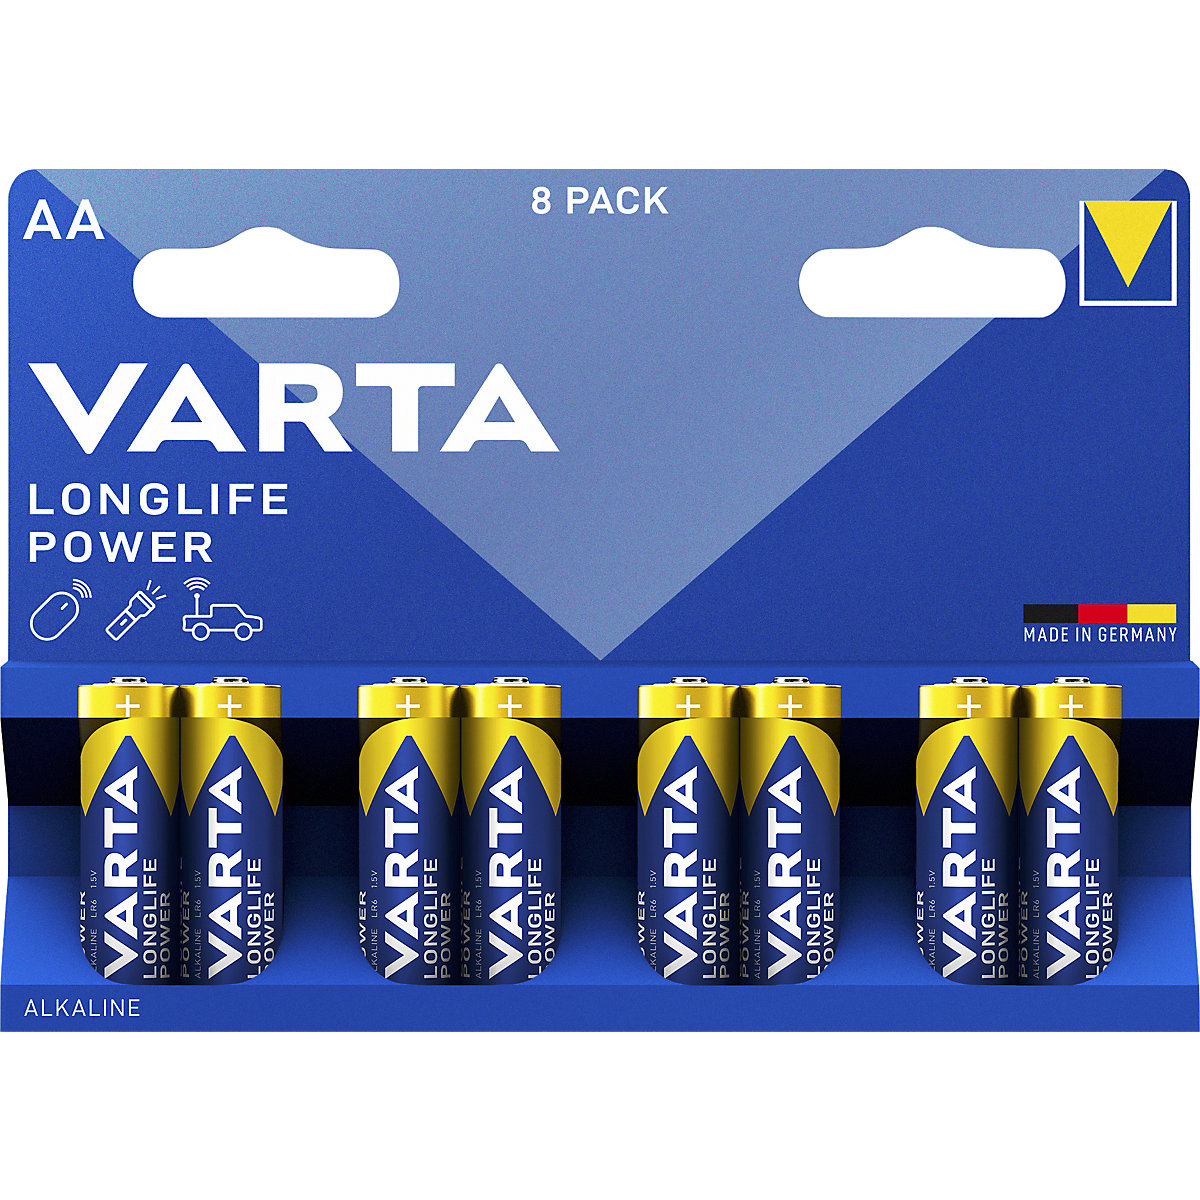 LONGLIFE power battery - VARTA